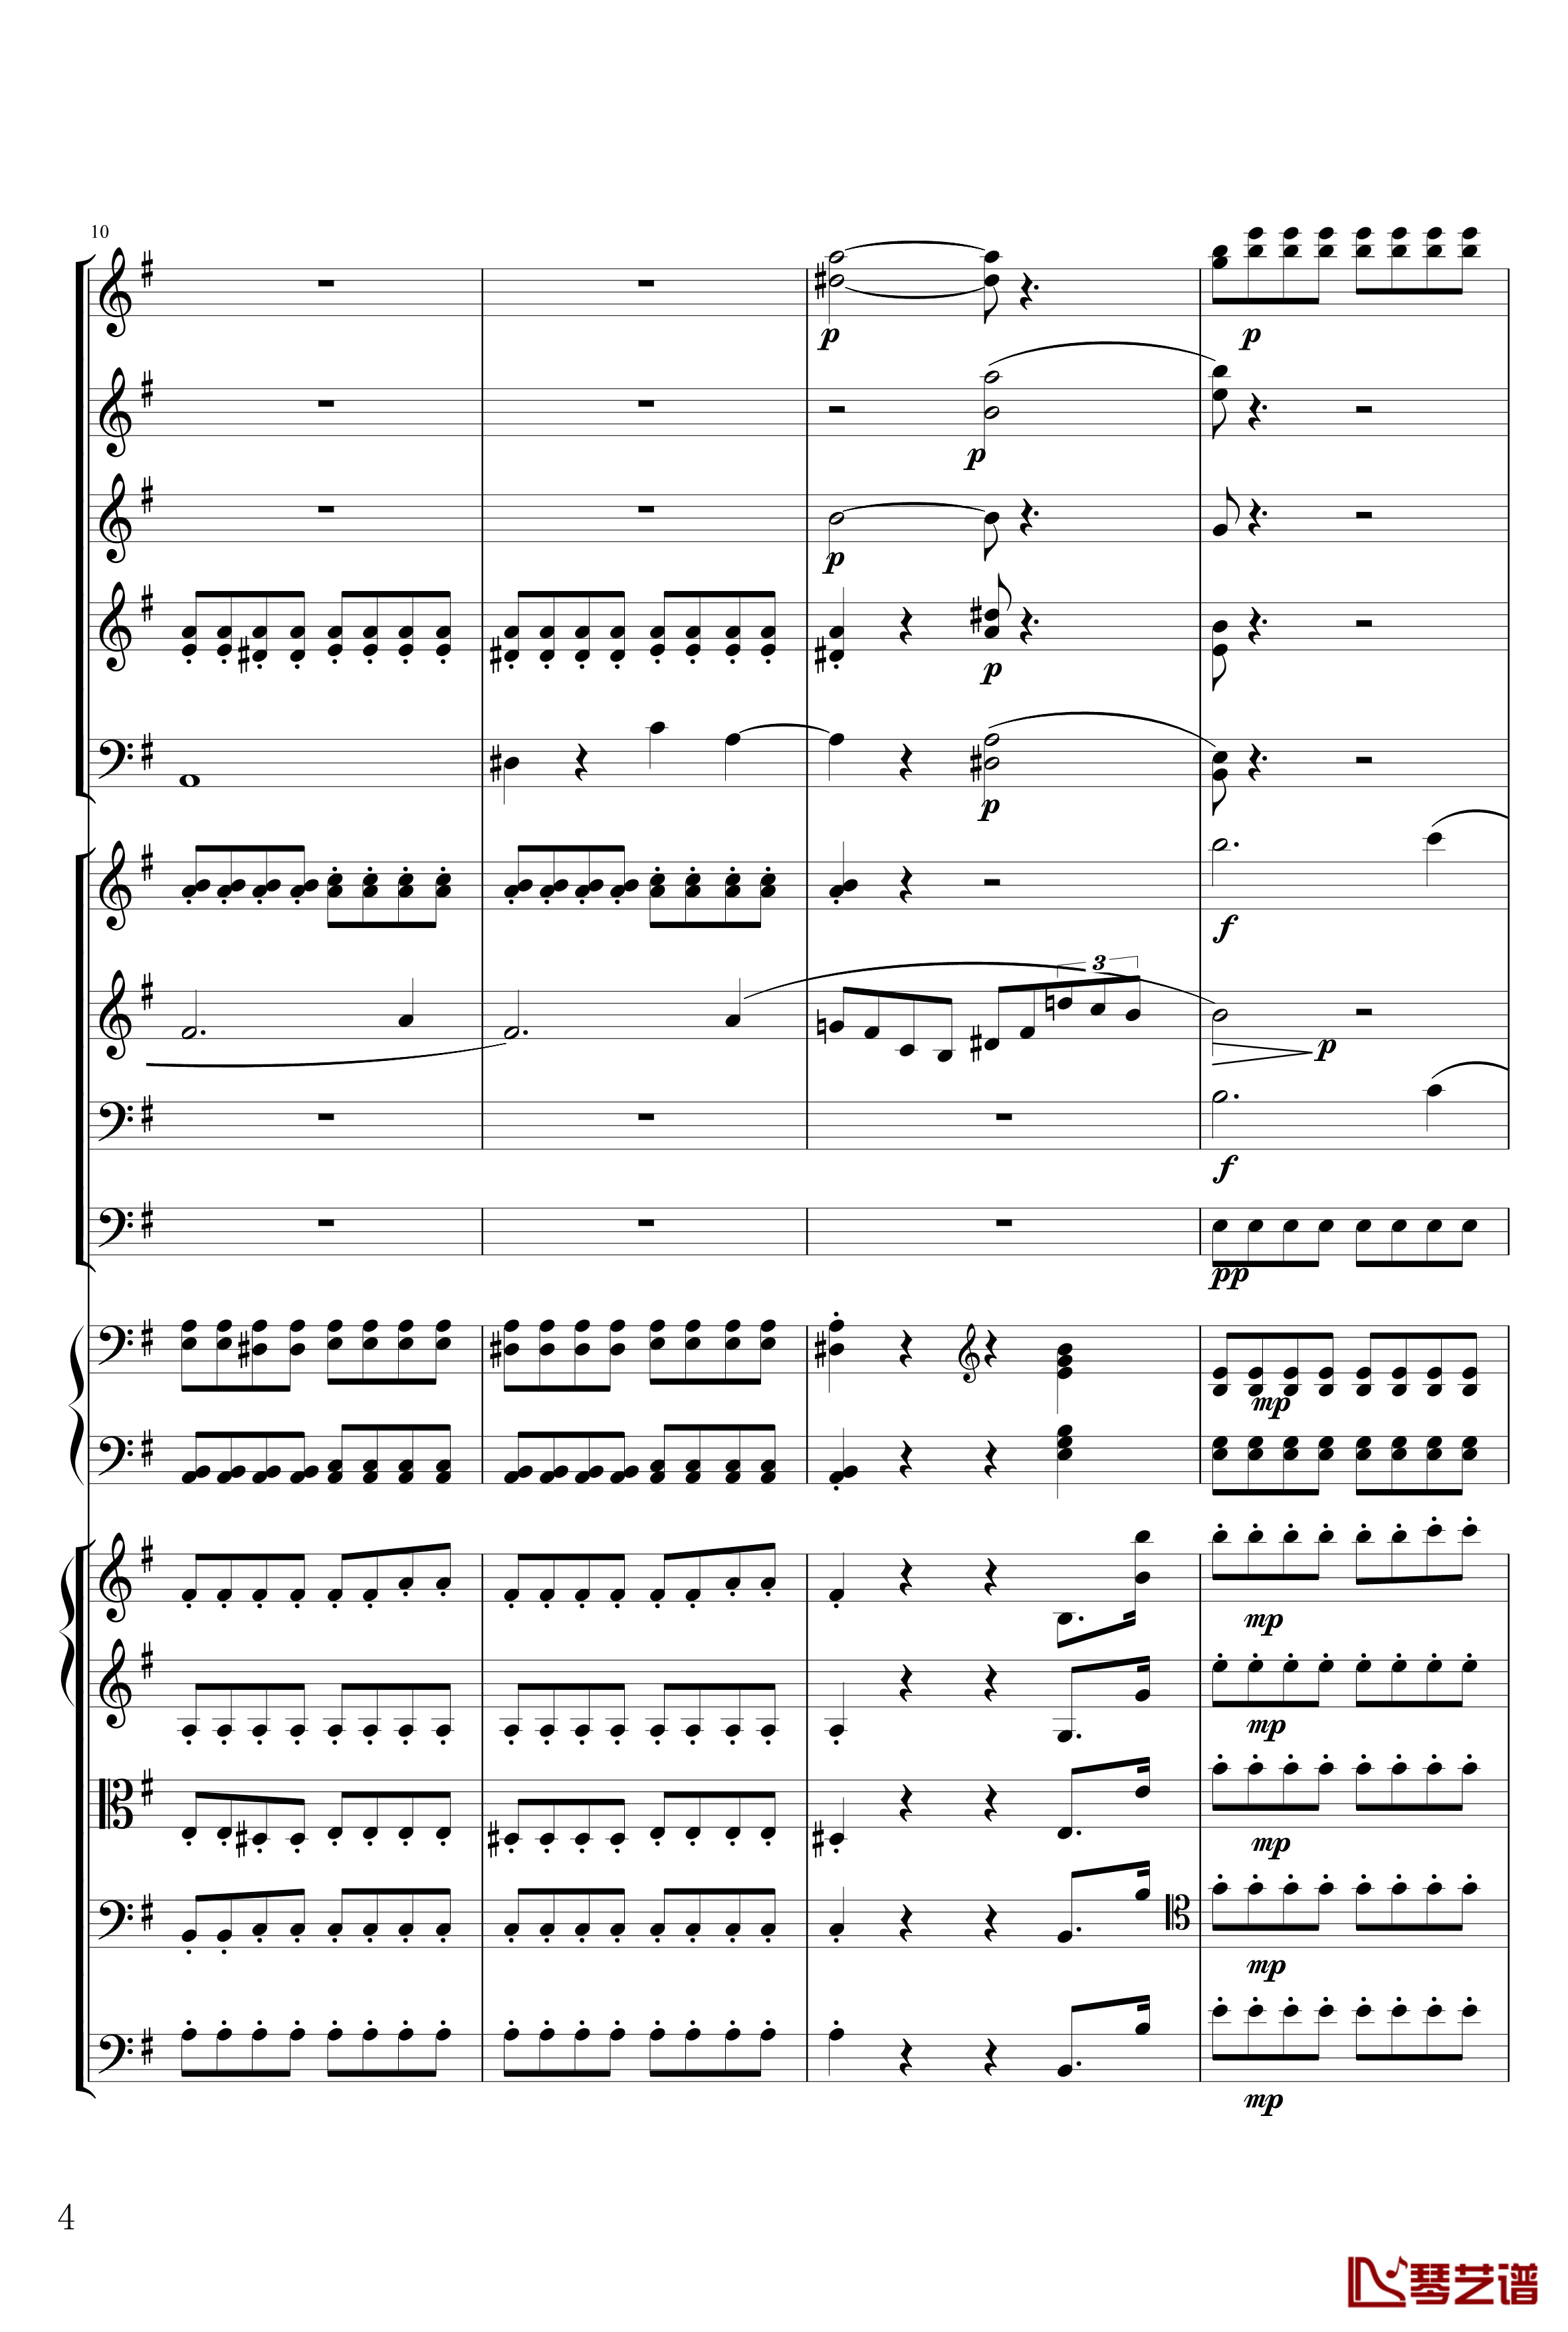 E小调前奏曲钢琴谱-交响乐版-肖邦-chopin4